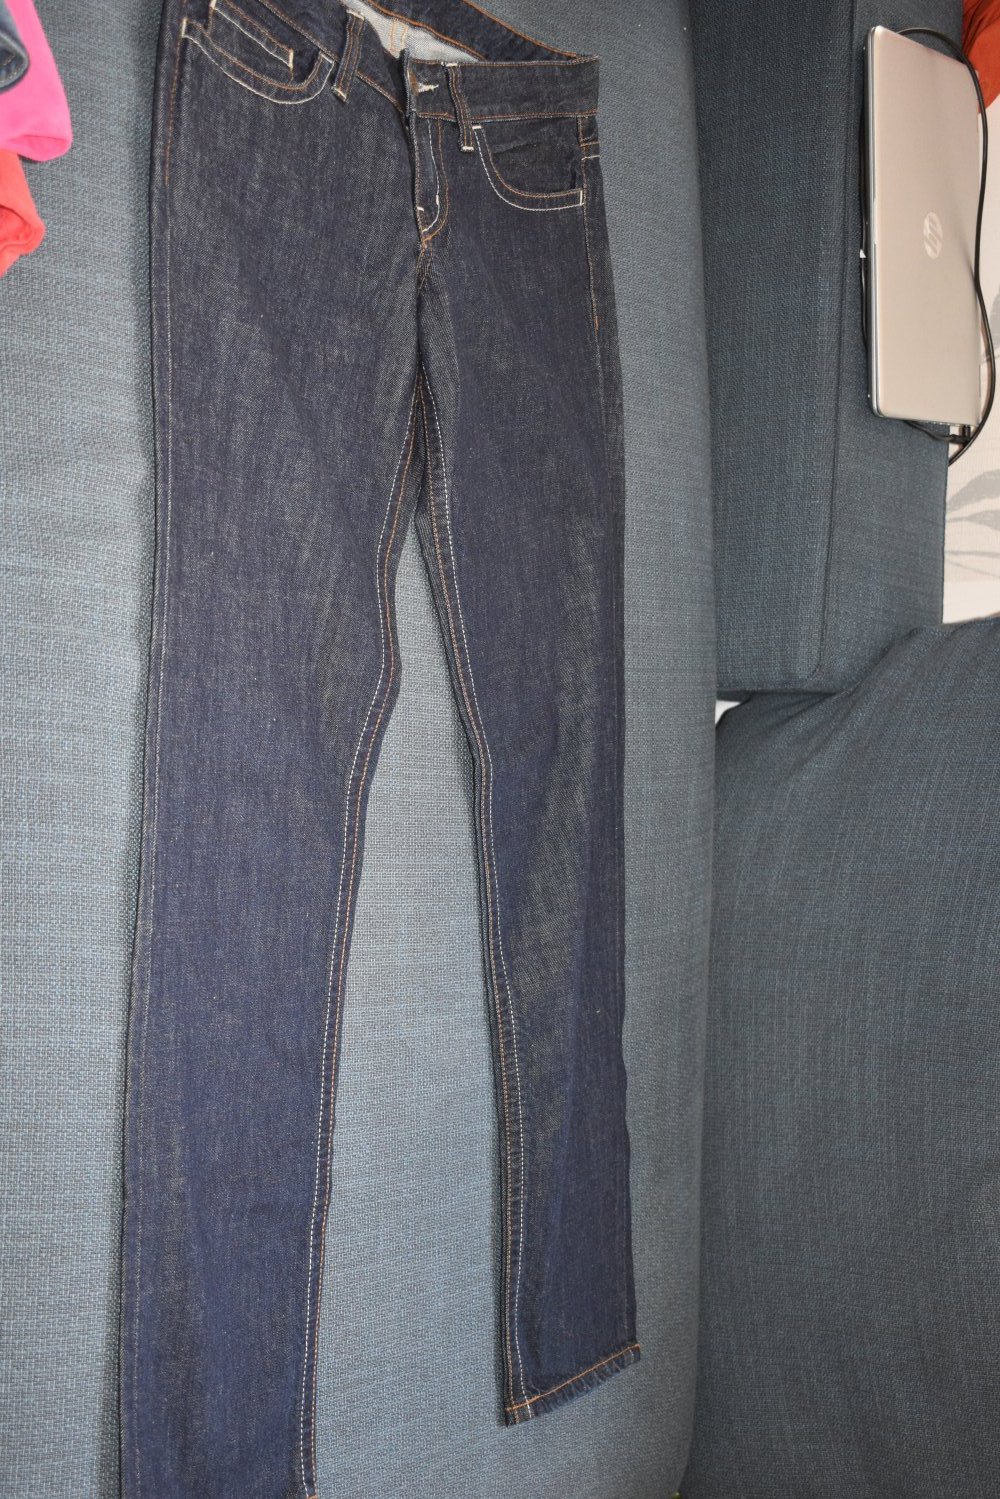 ATO Jeans ohne Stretch / 30/32